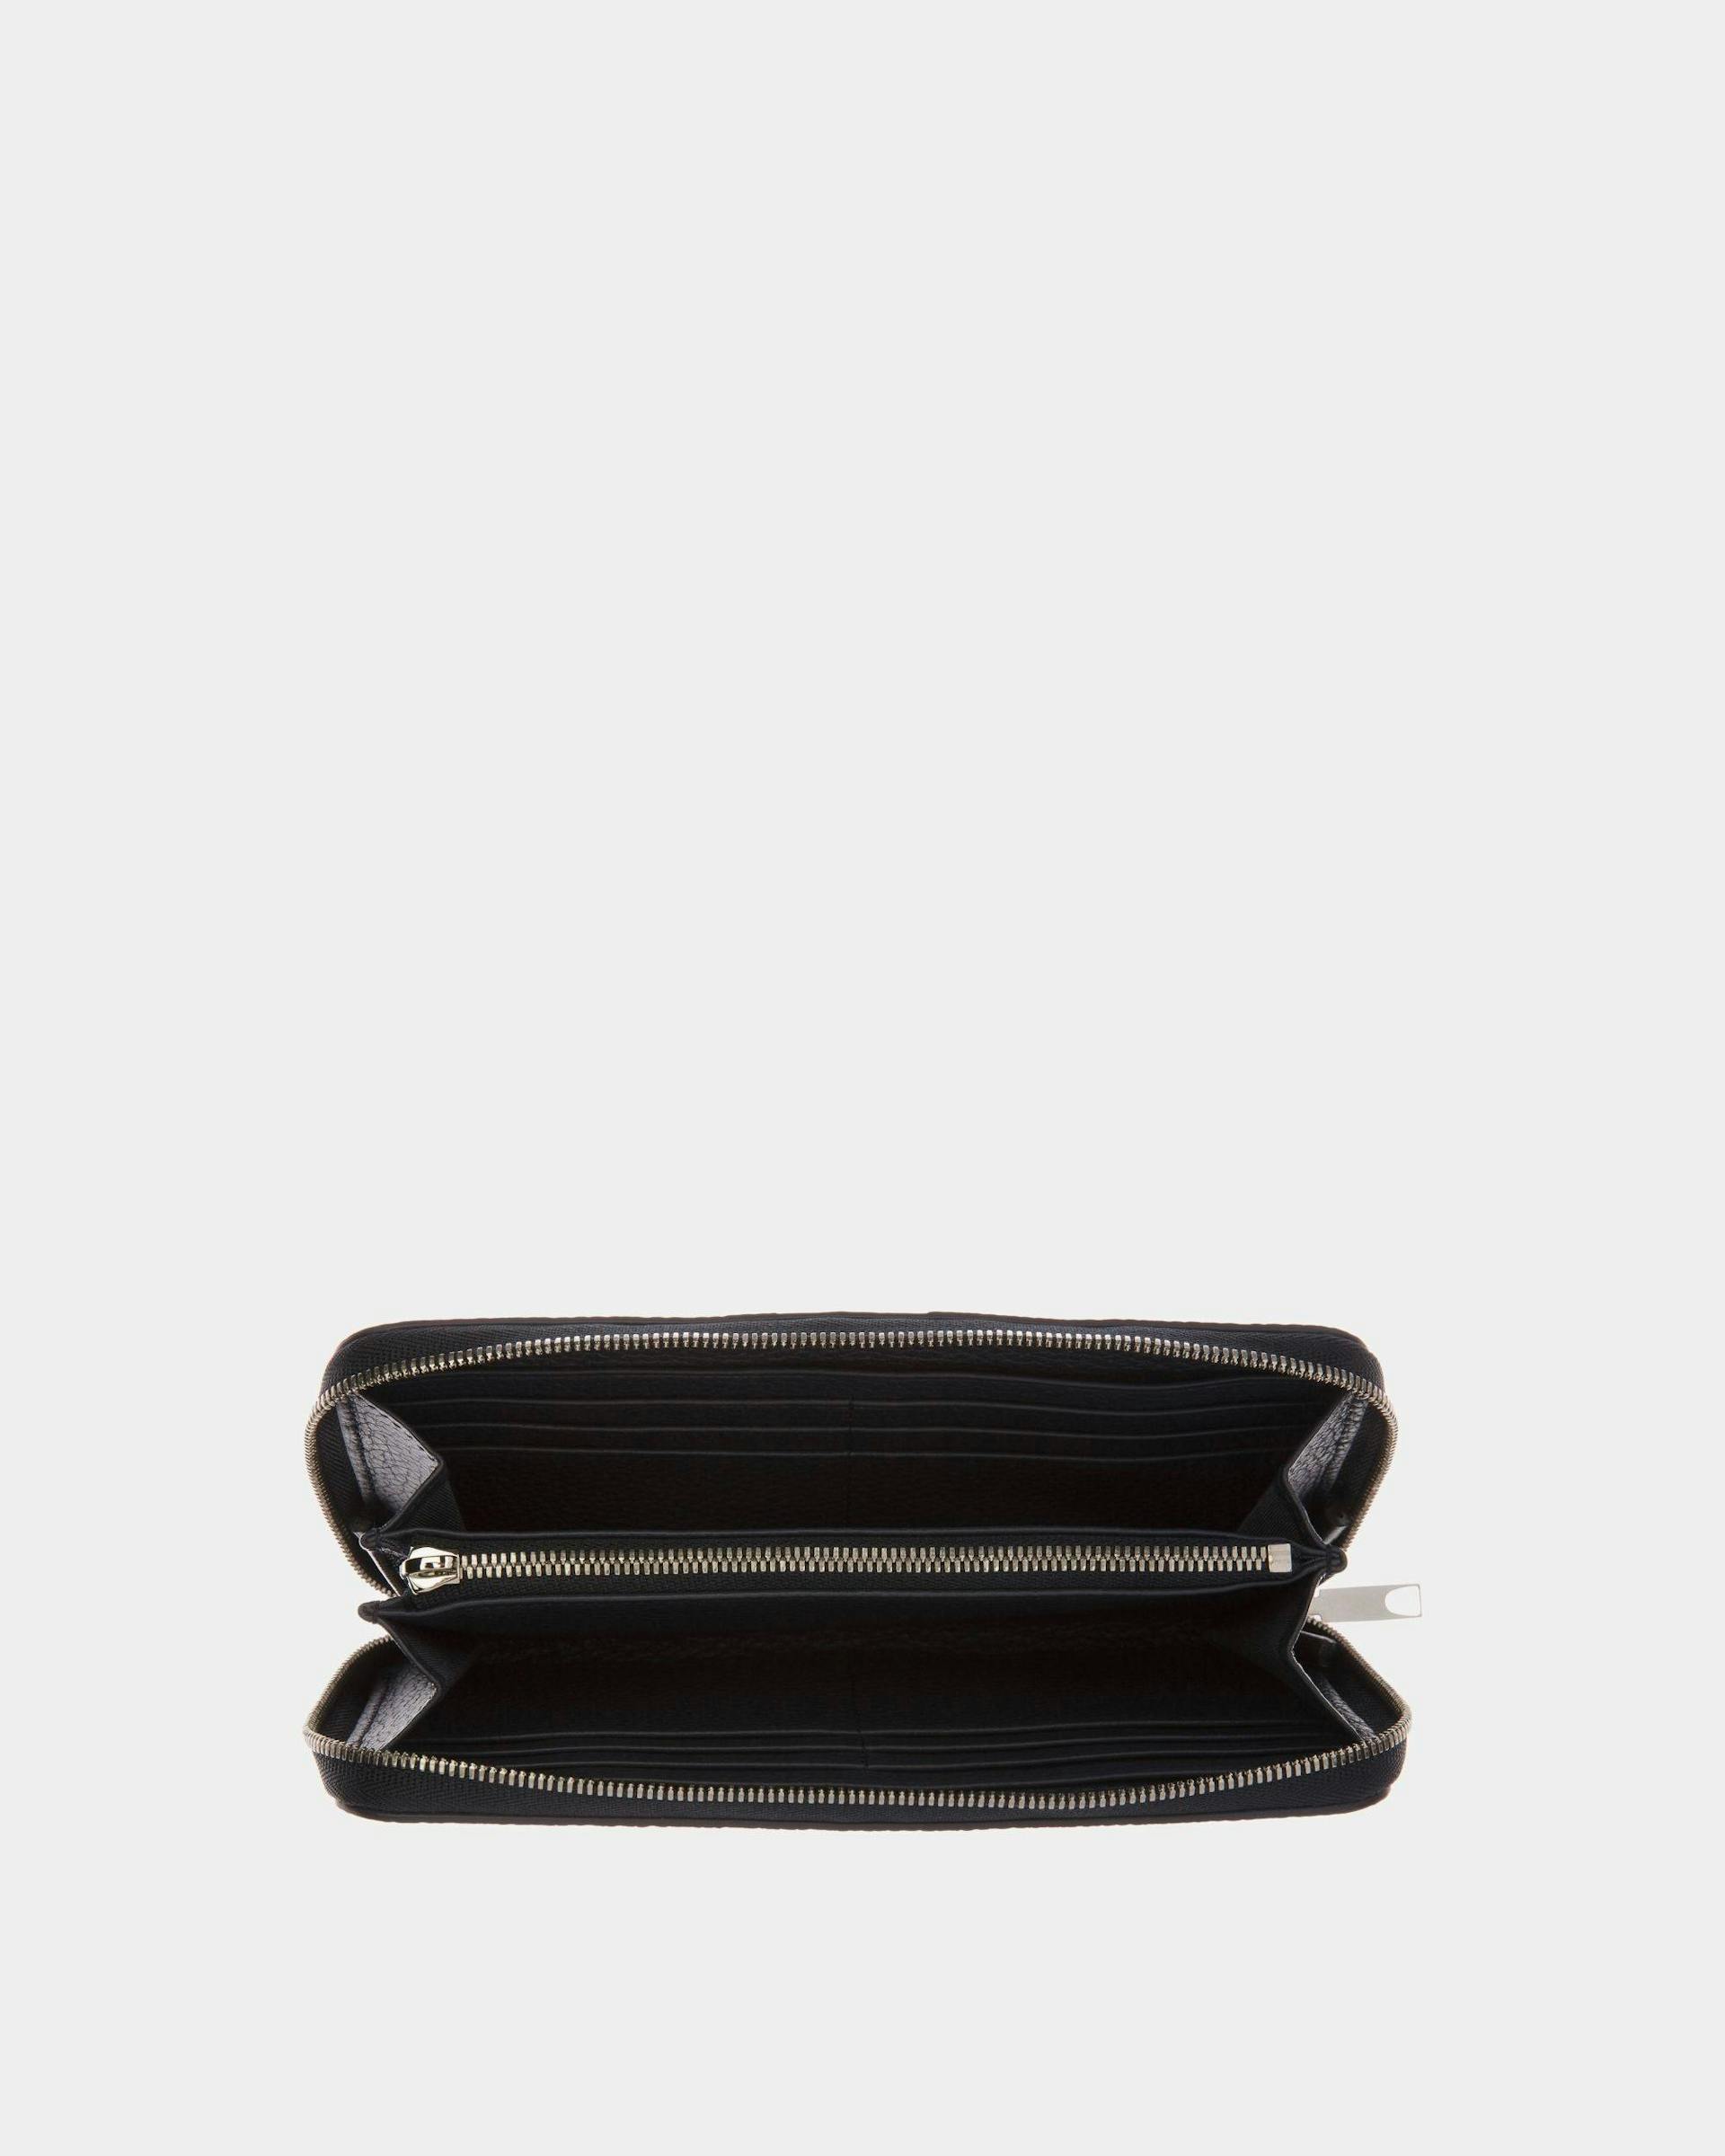 Men's Ribbon Zip Around Wallet In Midnight Leather | Bally | Still Life Open / Inside